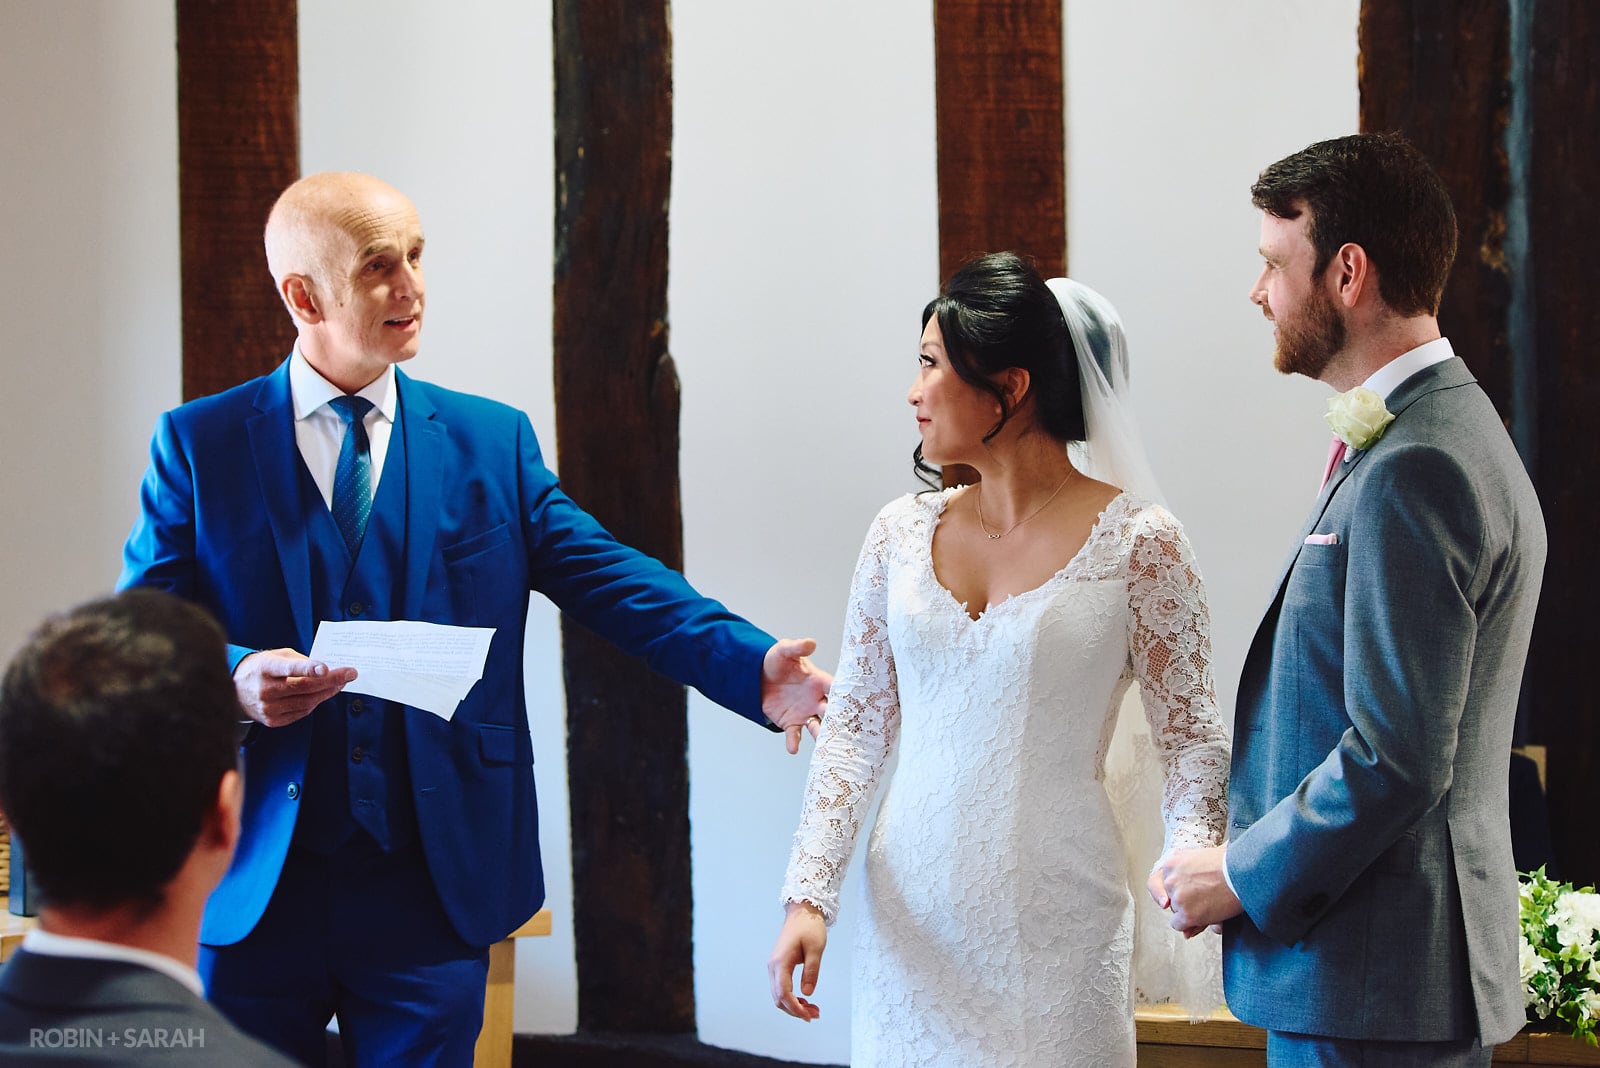 Wedding ceremony at Henley Room in Stratford upon Avon